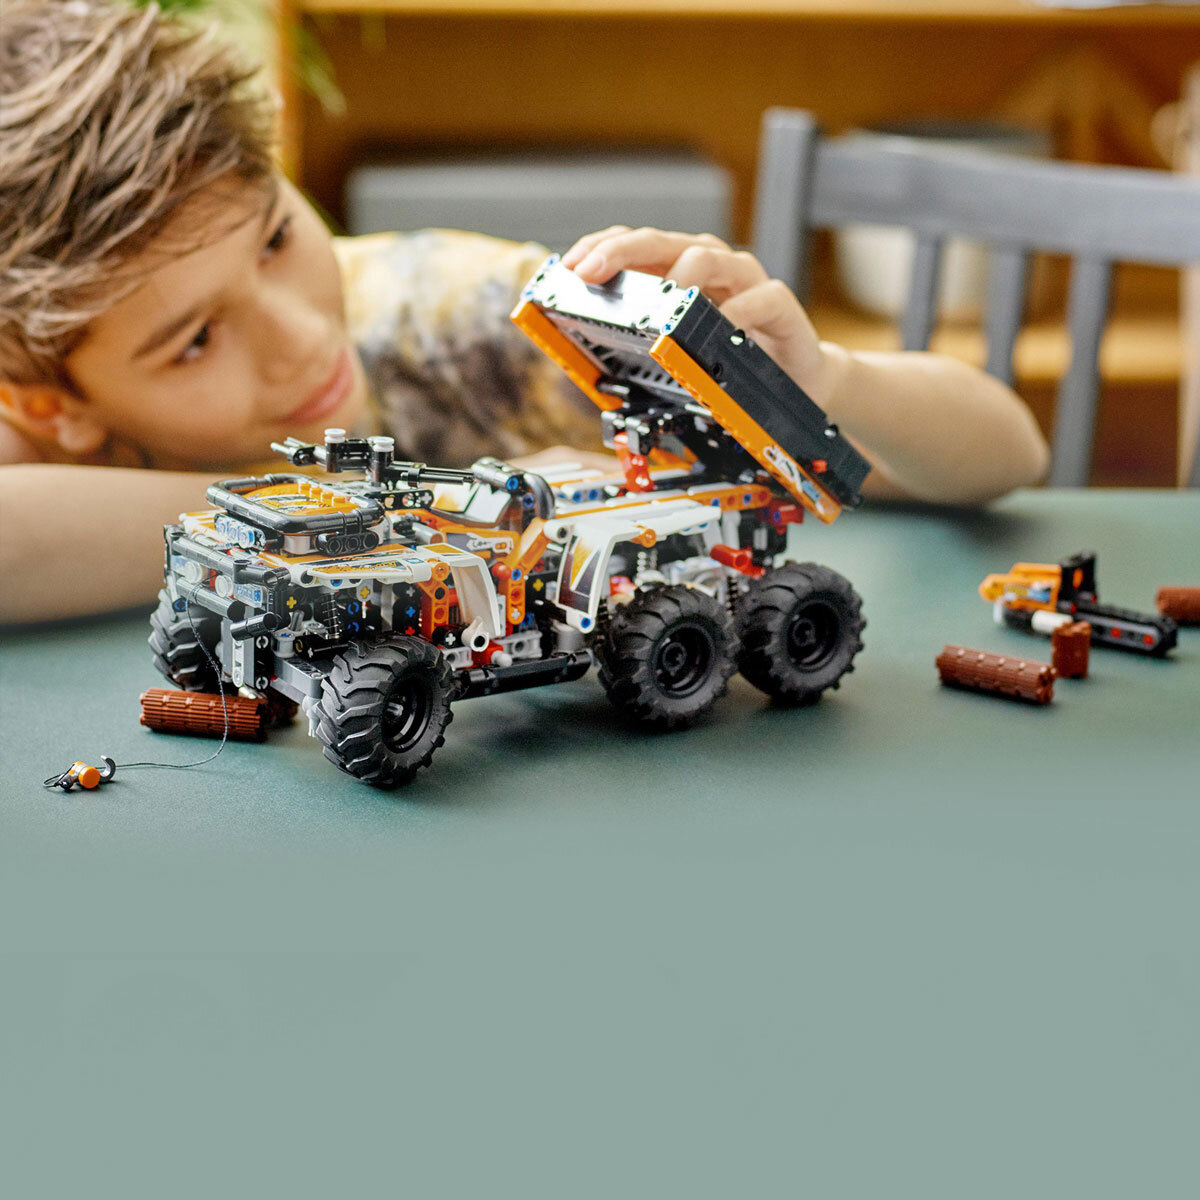 Buy LEGO Technic All-Terrain Vehicle Lifestyle Image at Costco.co.uk